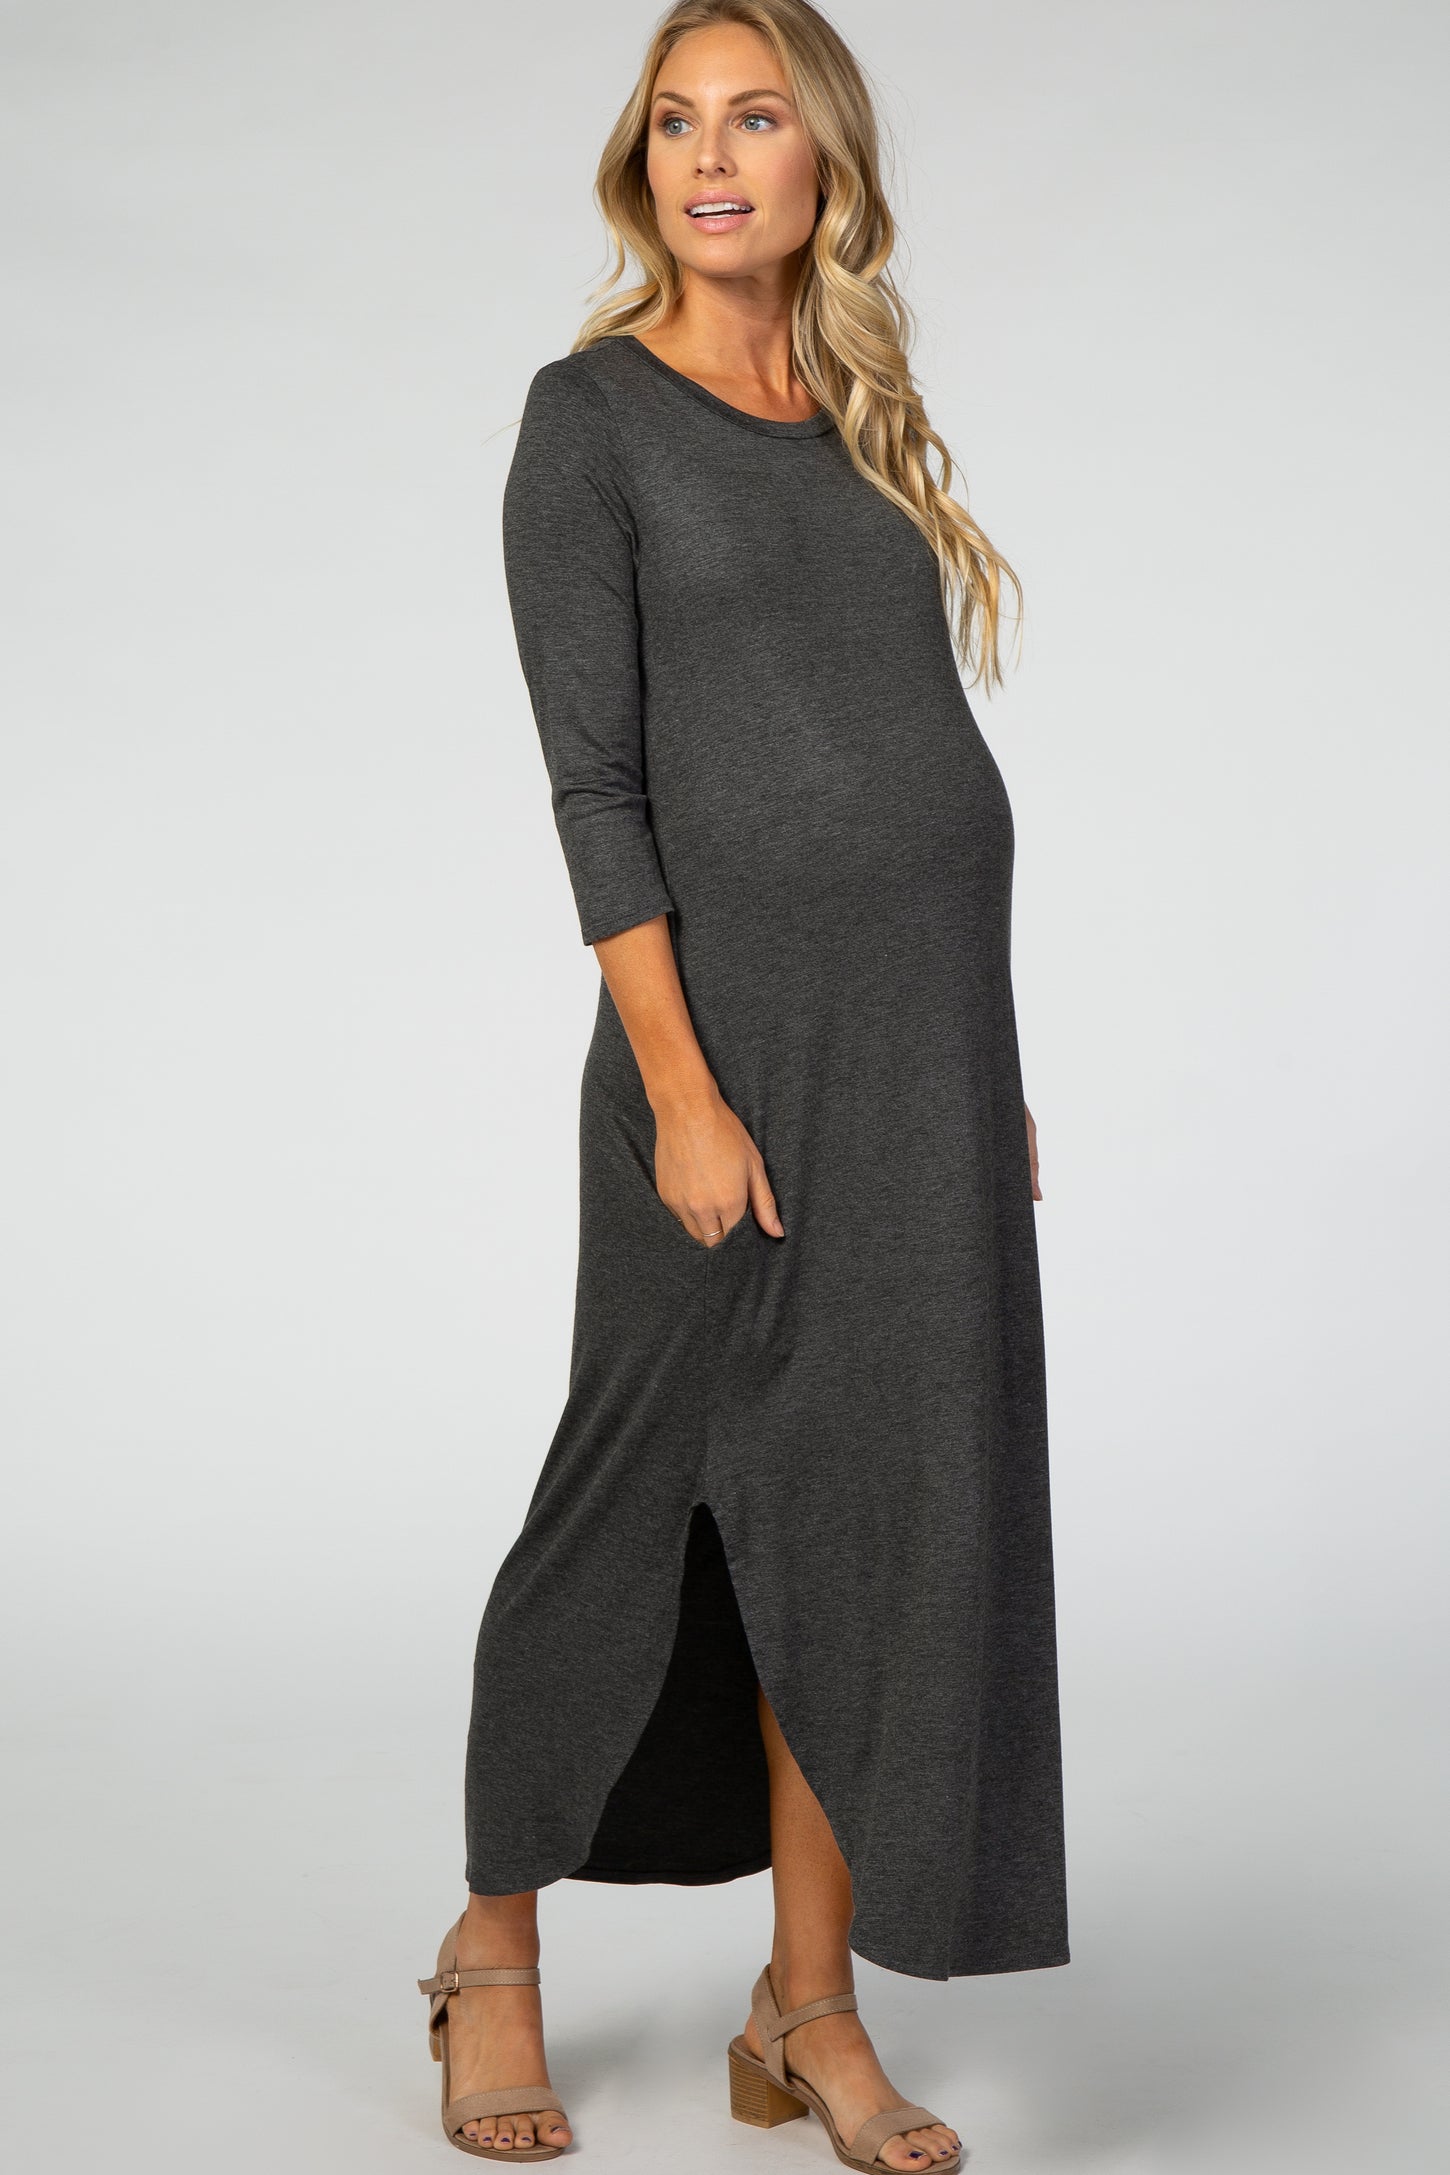 Charcoal 3/4 Sleeve Side Slit Maternity Maxi Dress